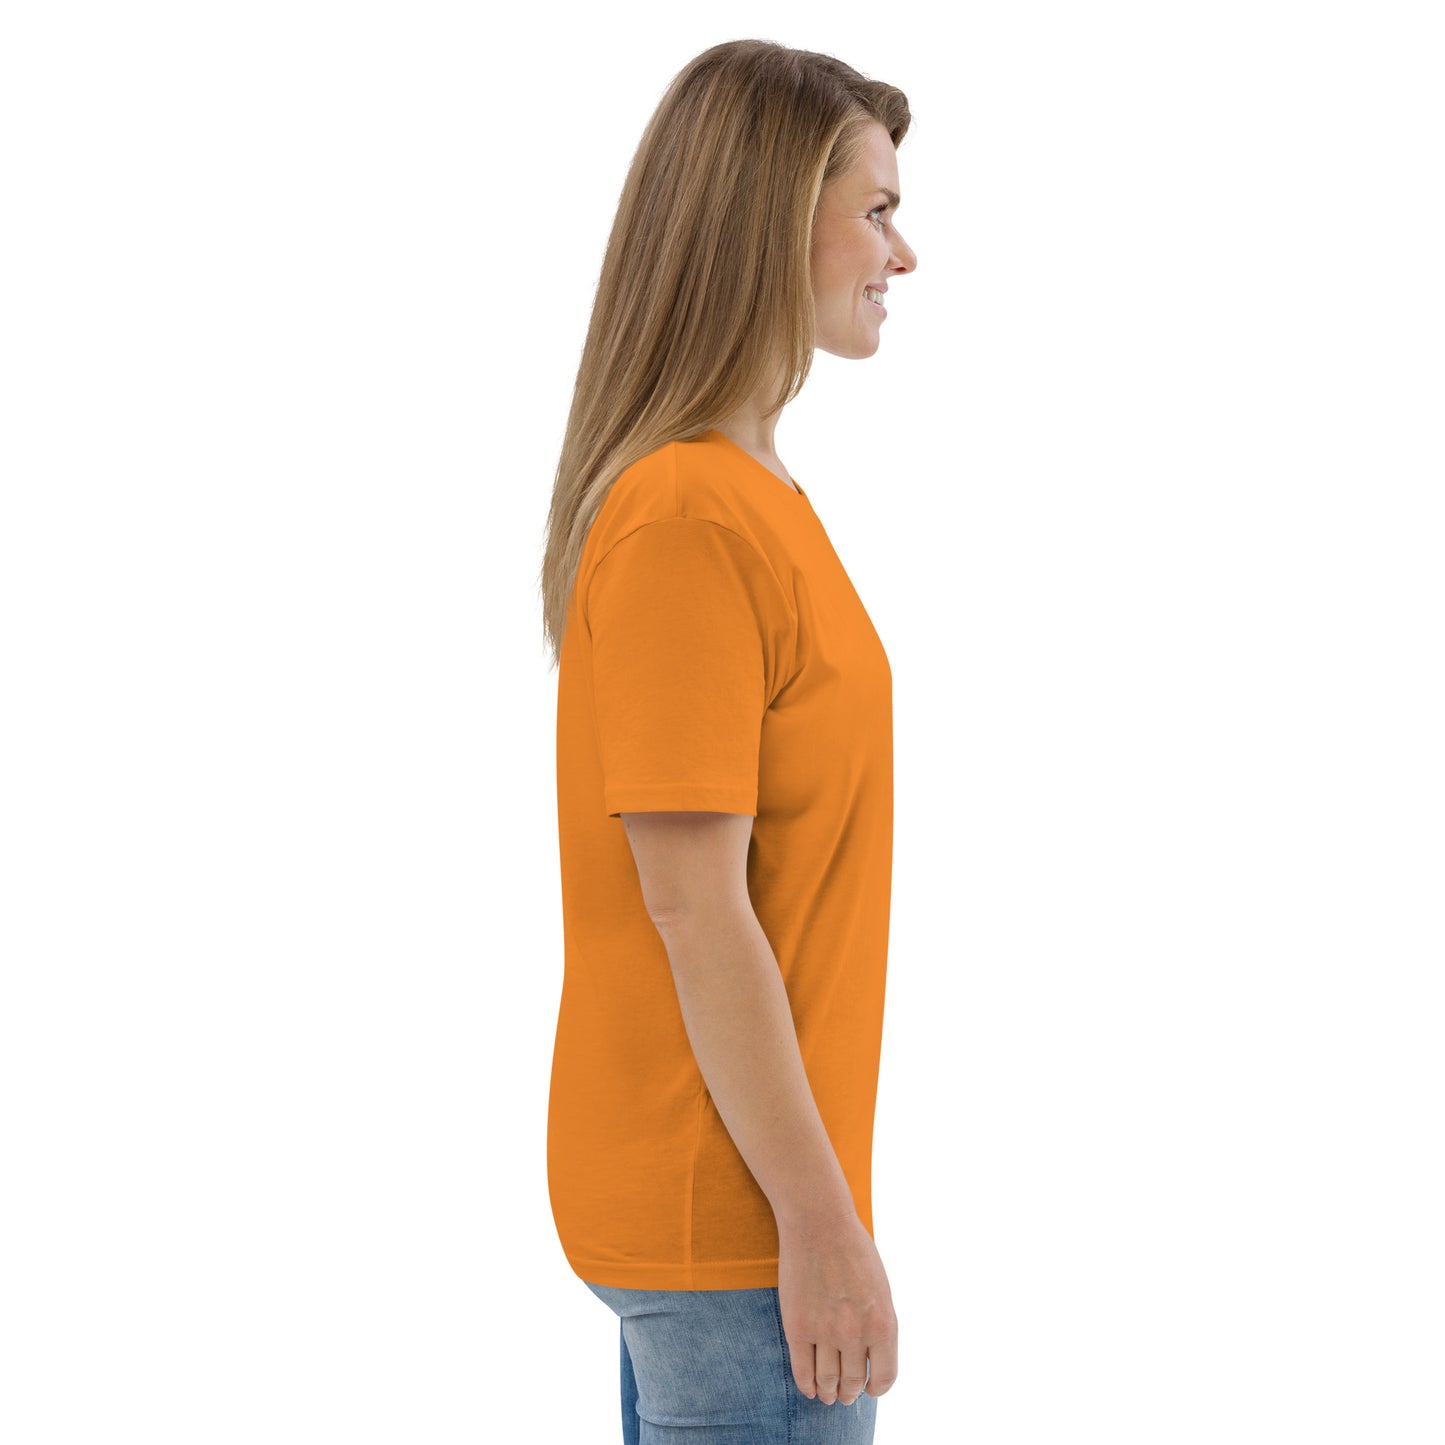 SOULSKY Logo Unisex Crewneck T-shirt - Burnt Orange